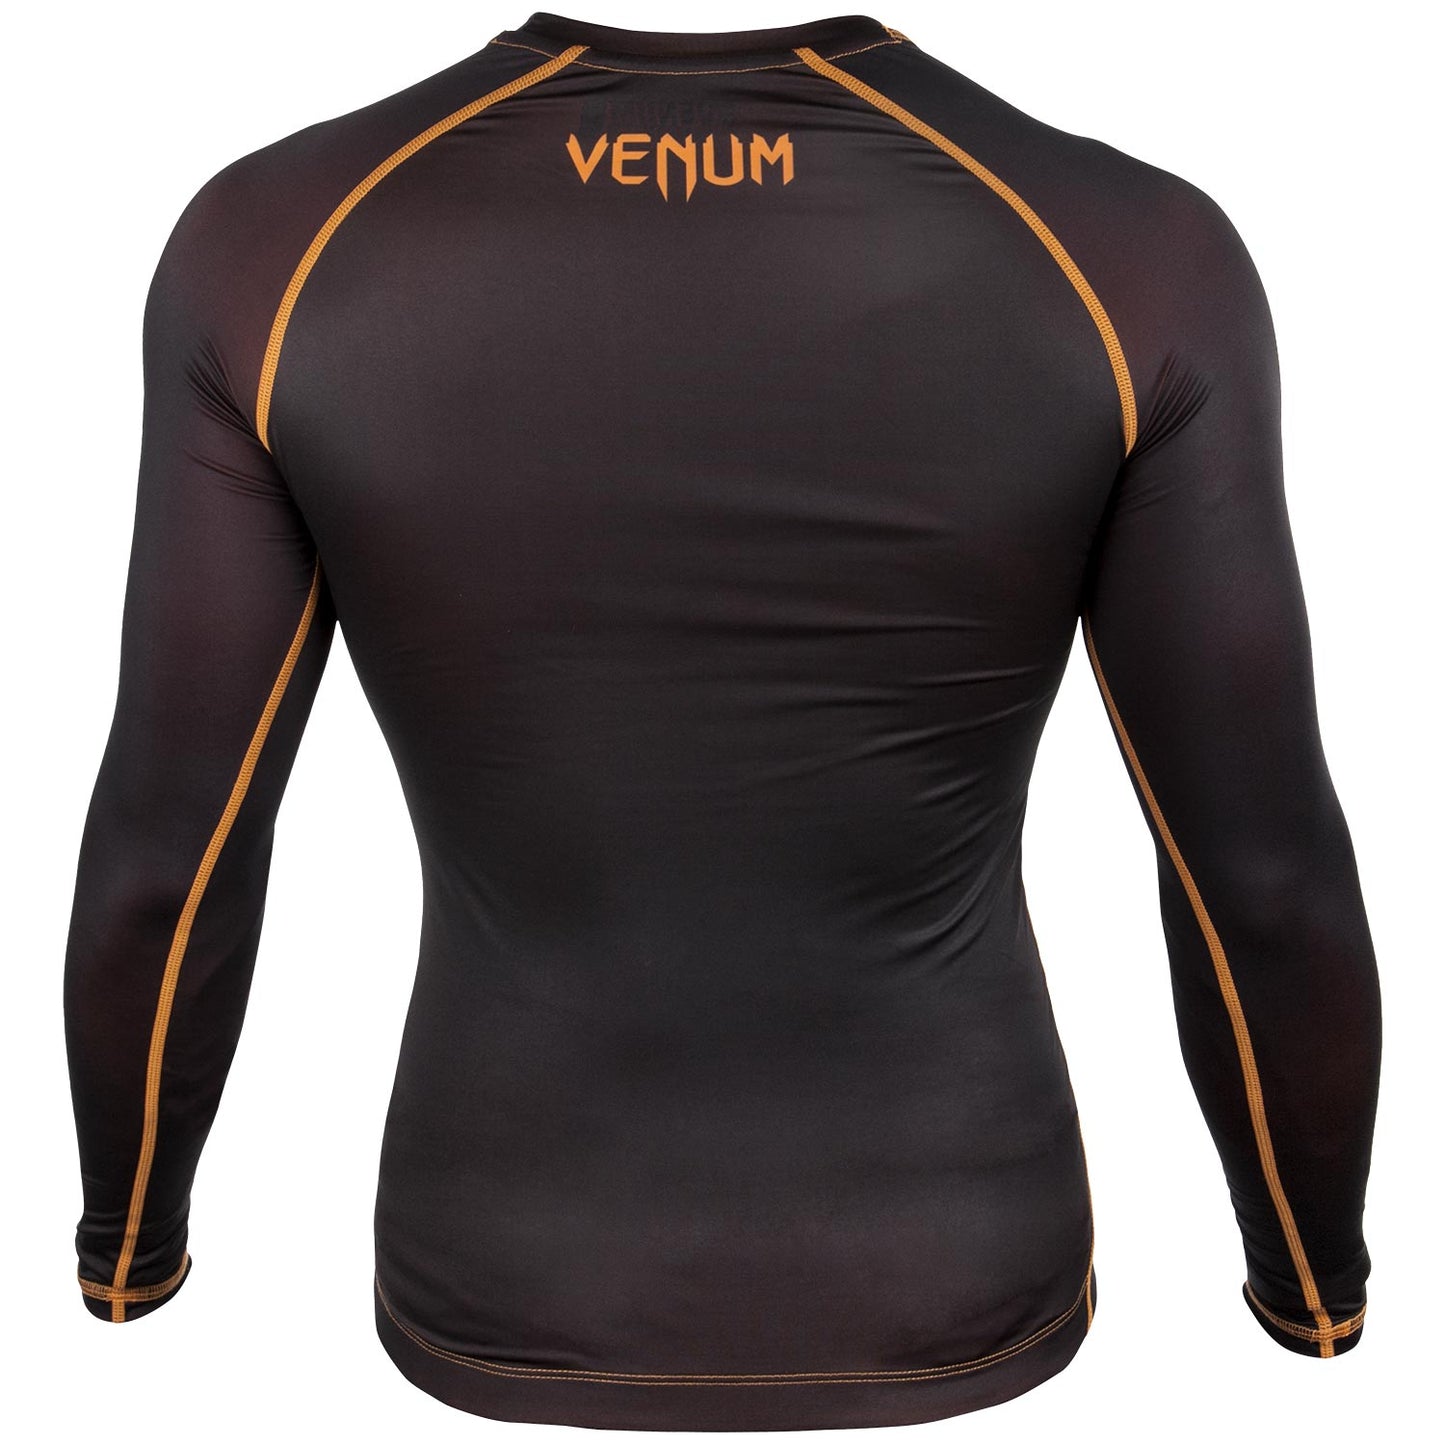 Camiseta de Compresión Venum Contender 3.0  - Mangas Largas - Negro/Naranja Fluo